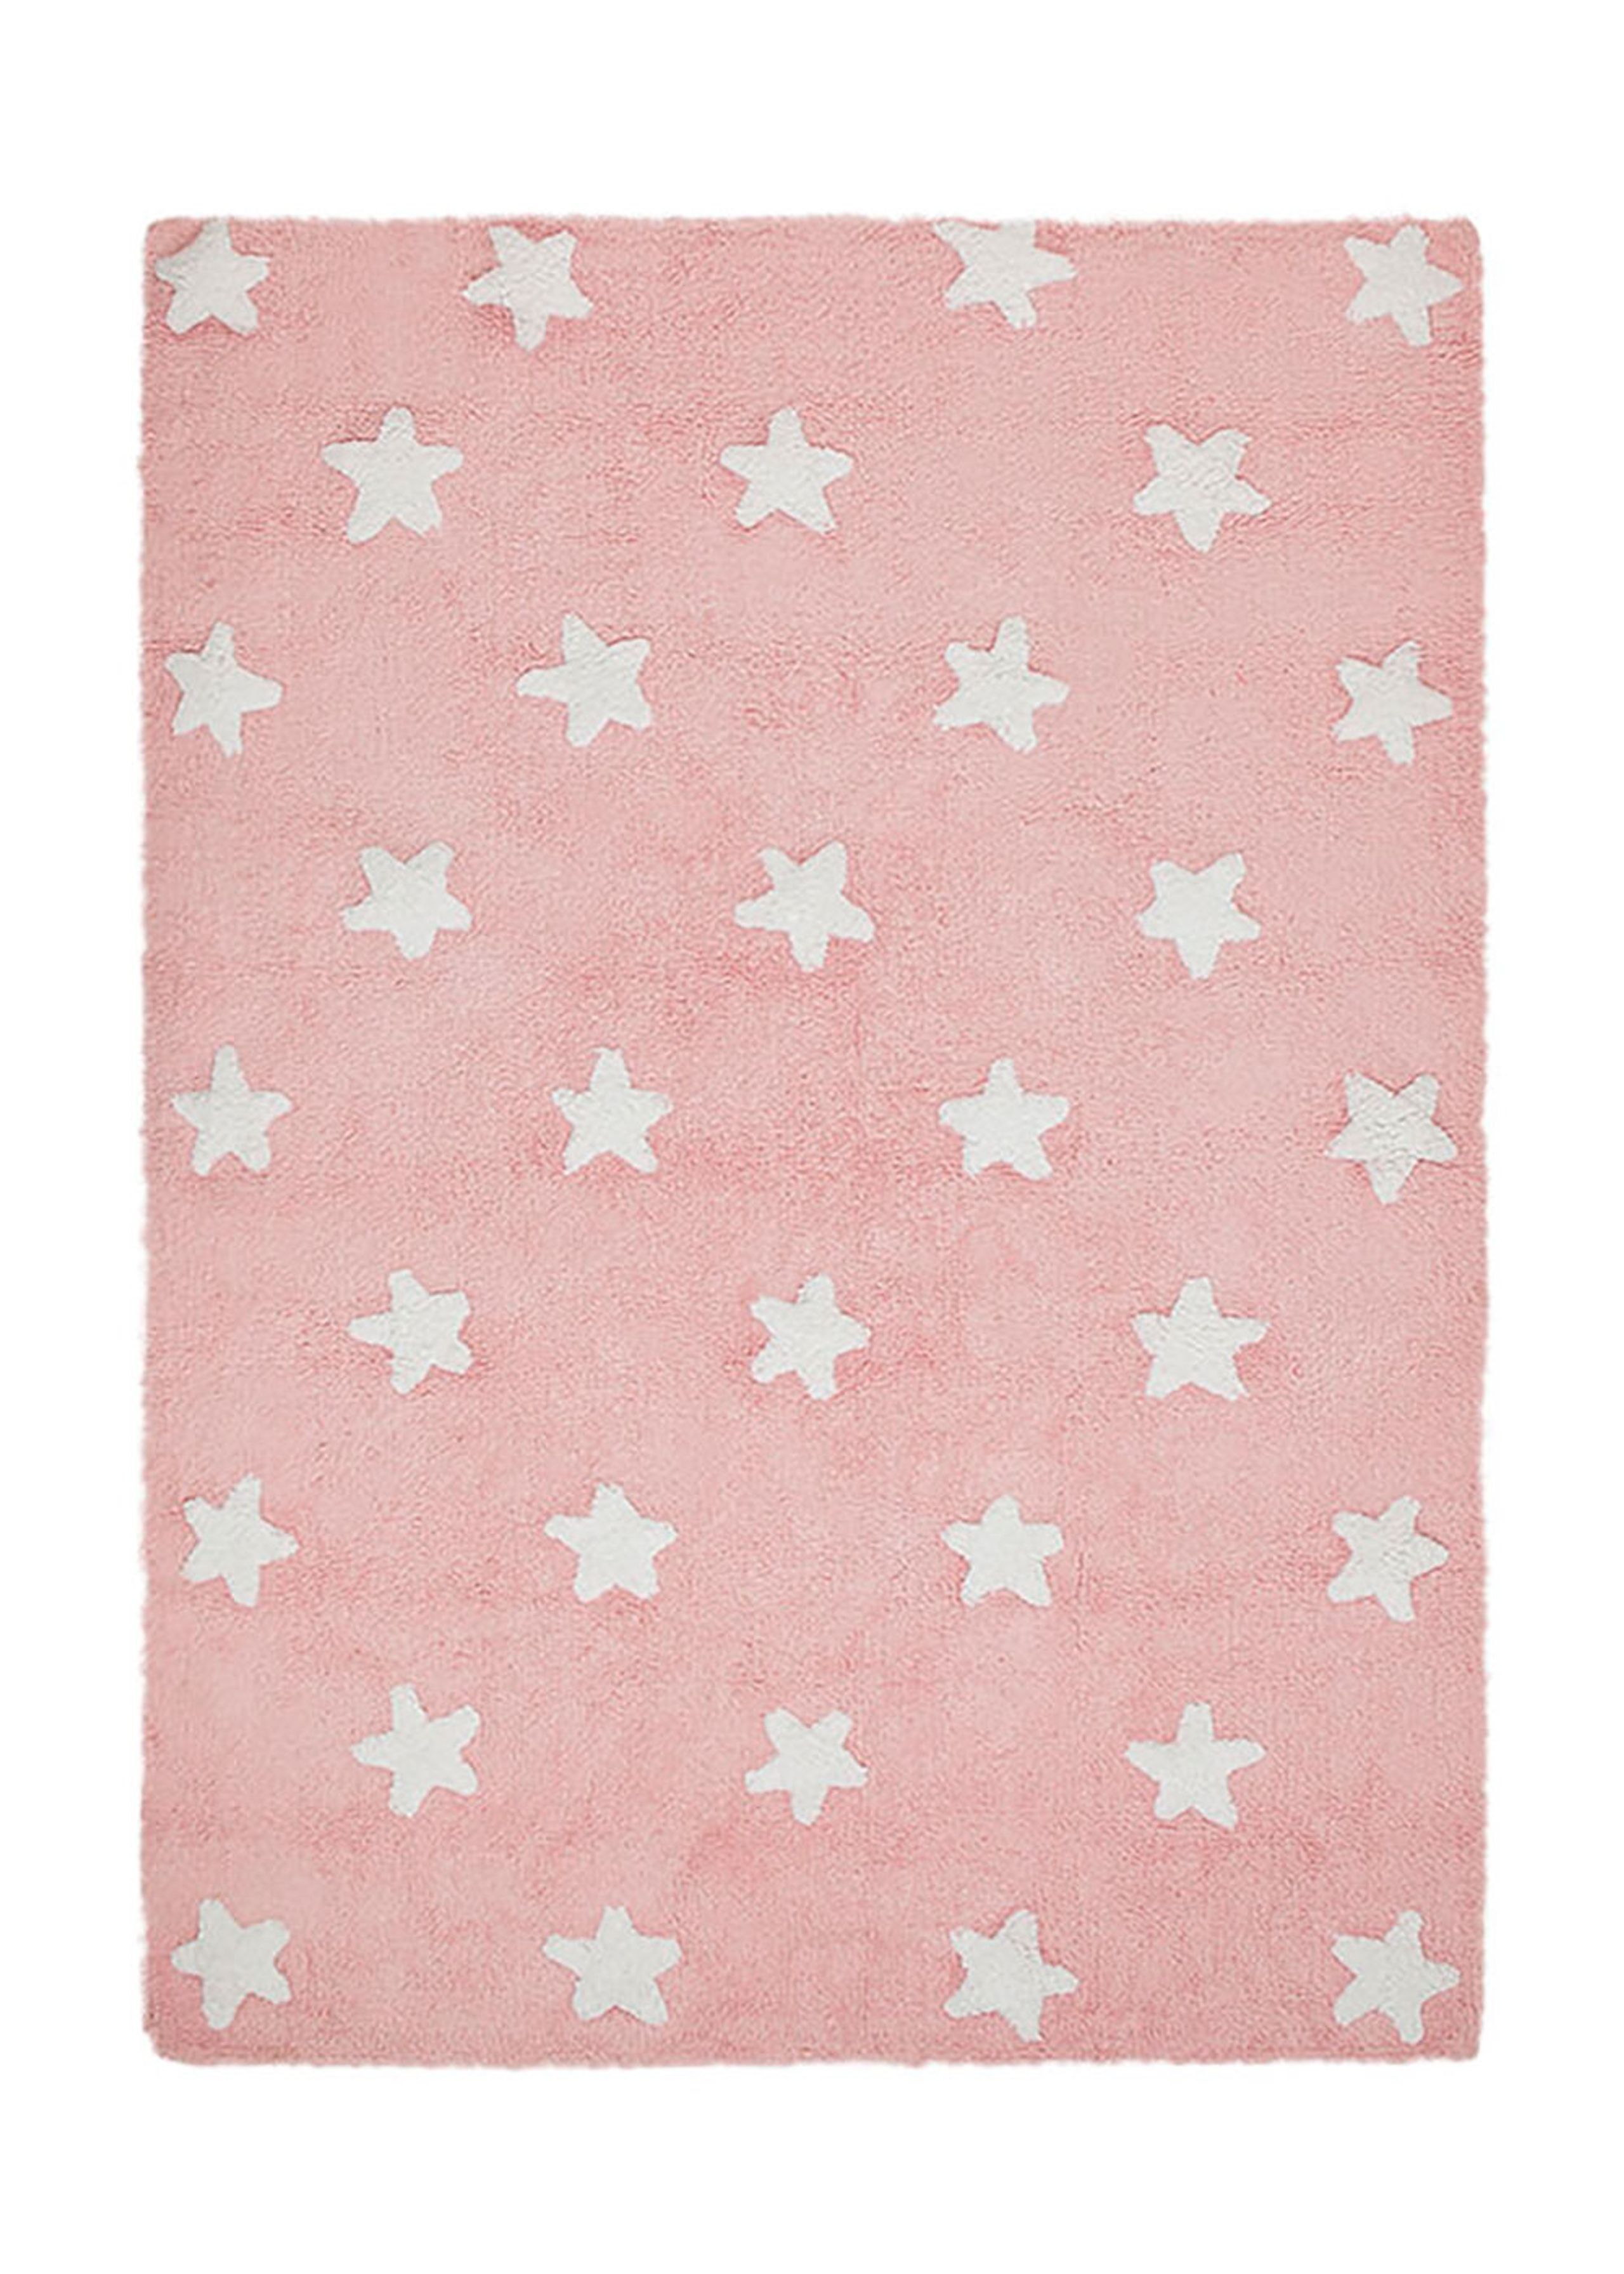 Lorena Canals - Tapis pour enfants - Washable Rug Stars - Pink / White